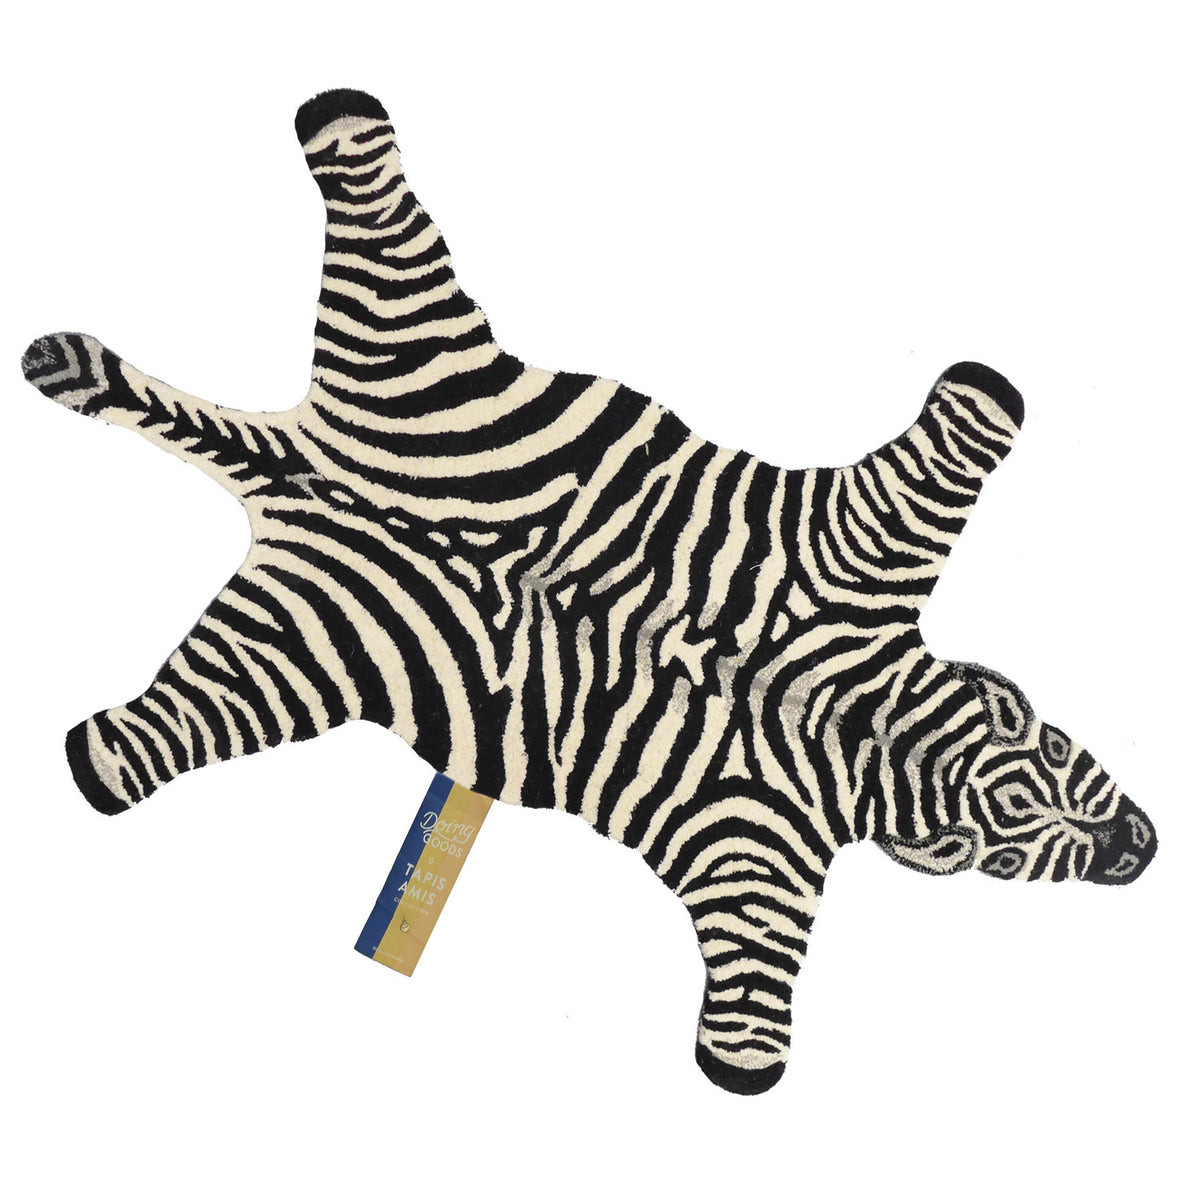 Chubby Zebra small rug, Doing Goods Hedgehog & Deer